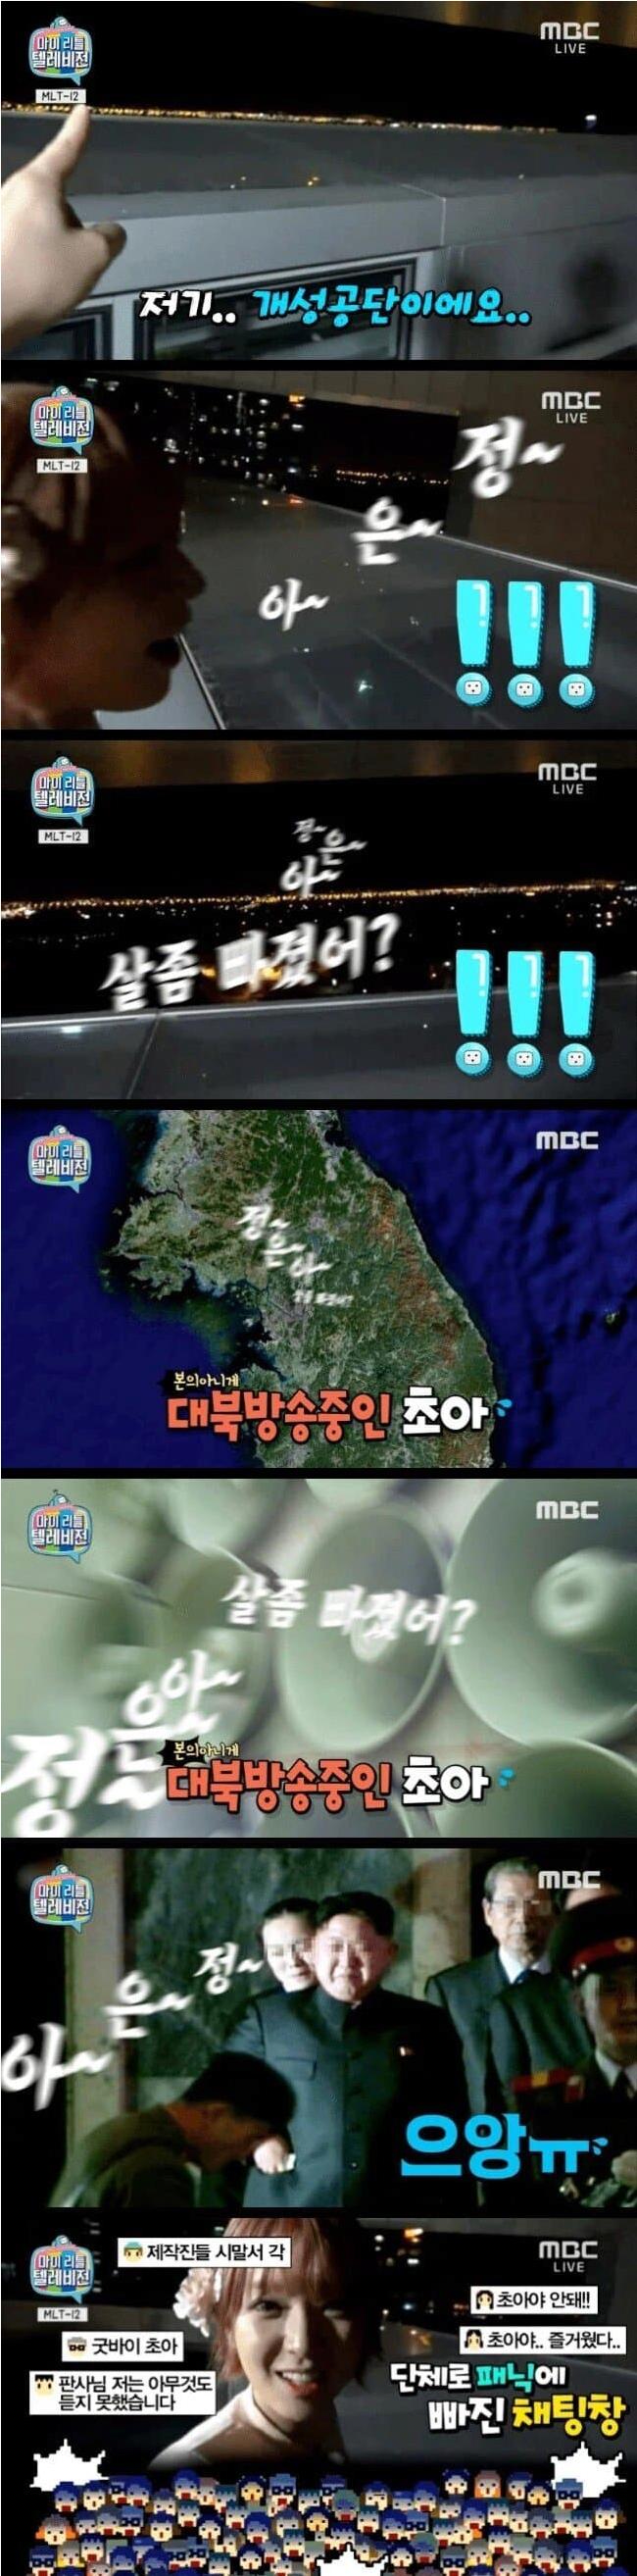 AOA Choa Legend broadcasts to North Korea